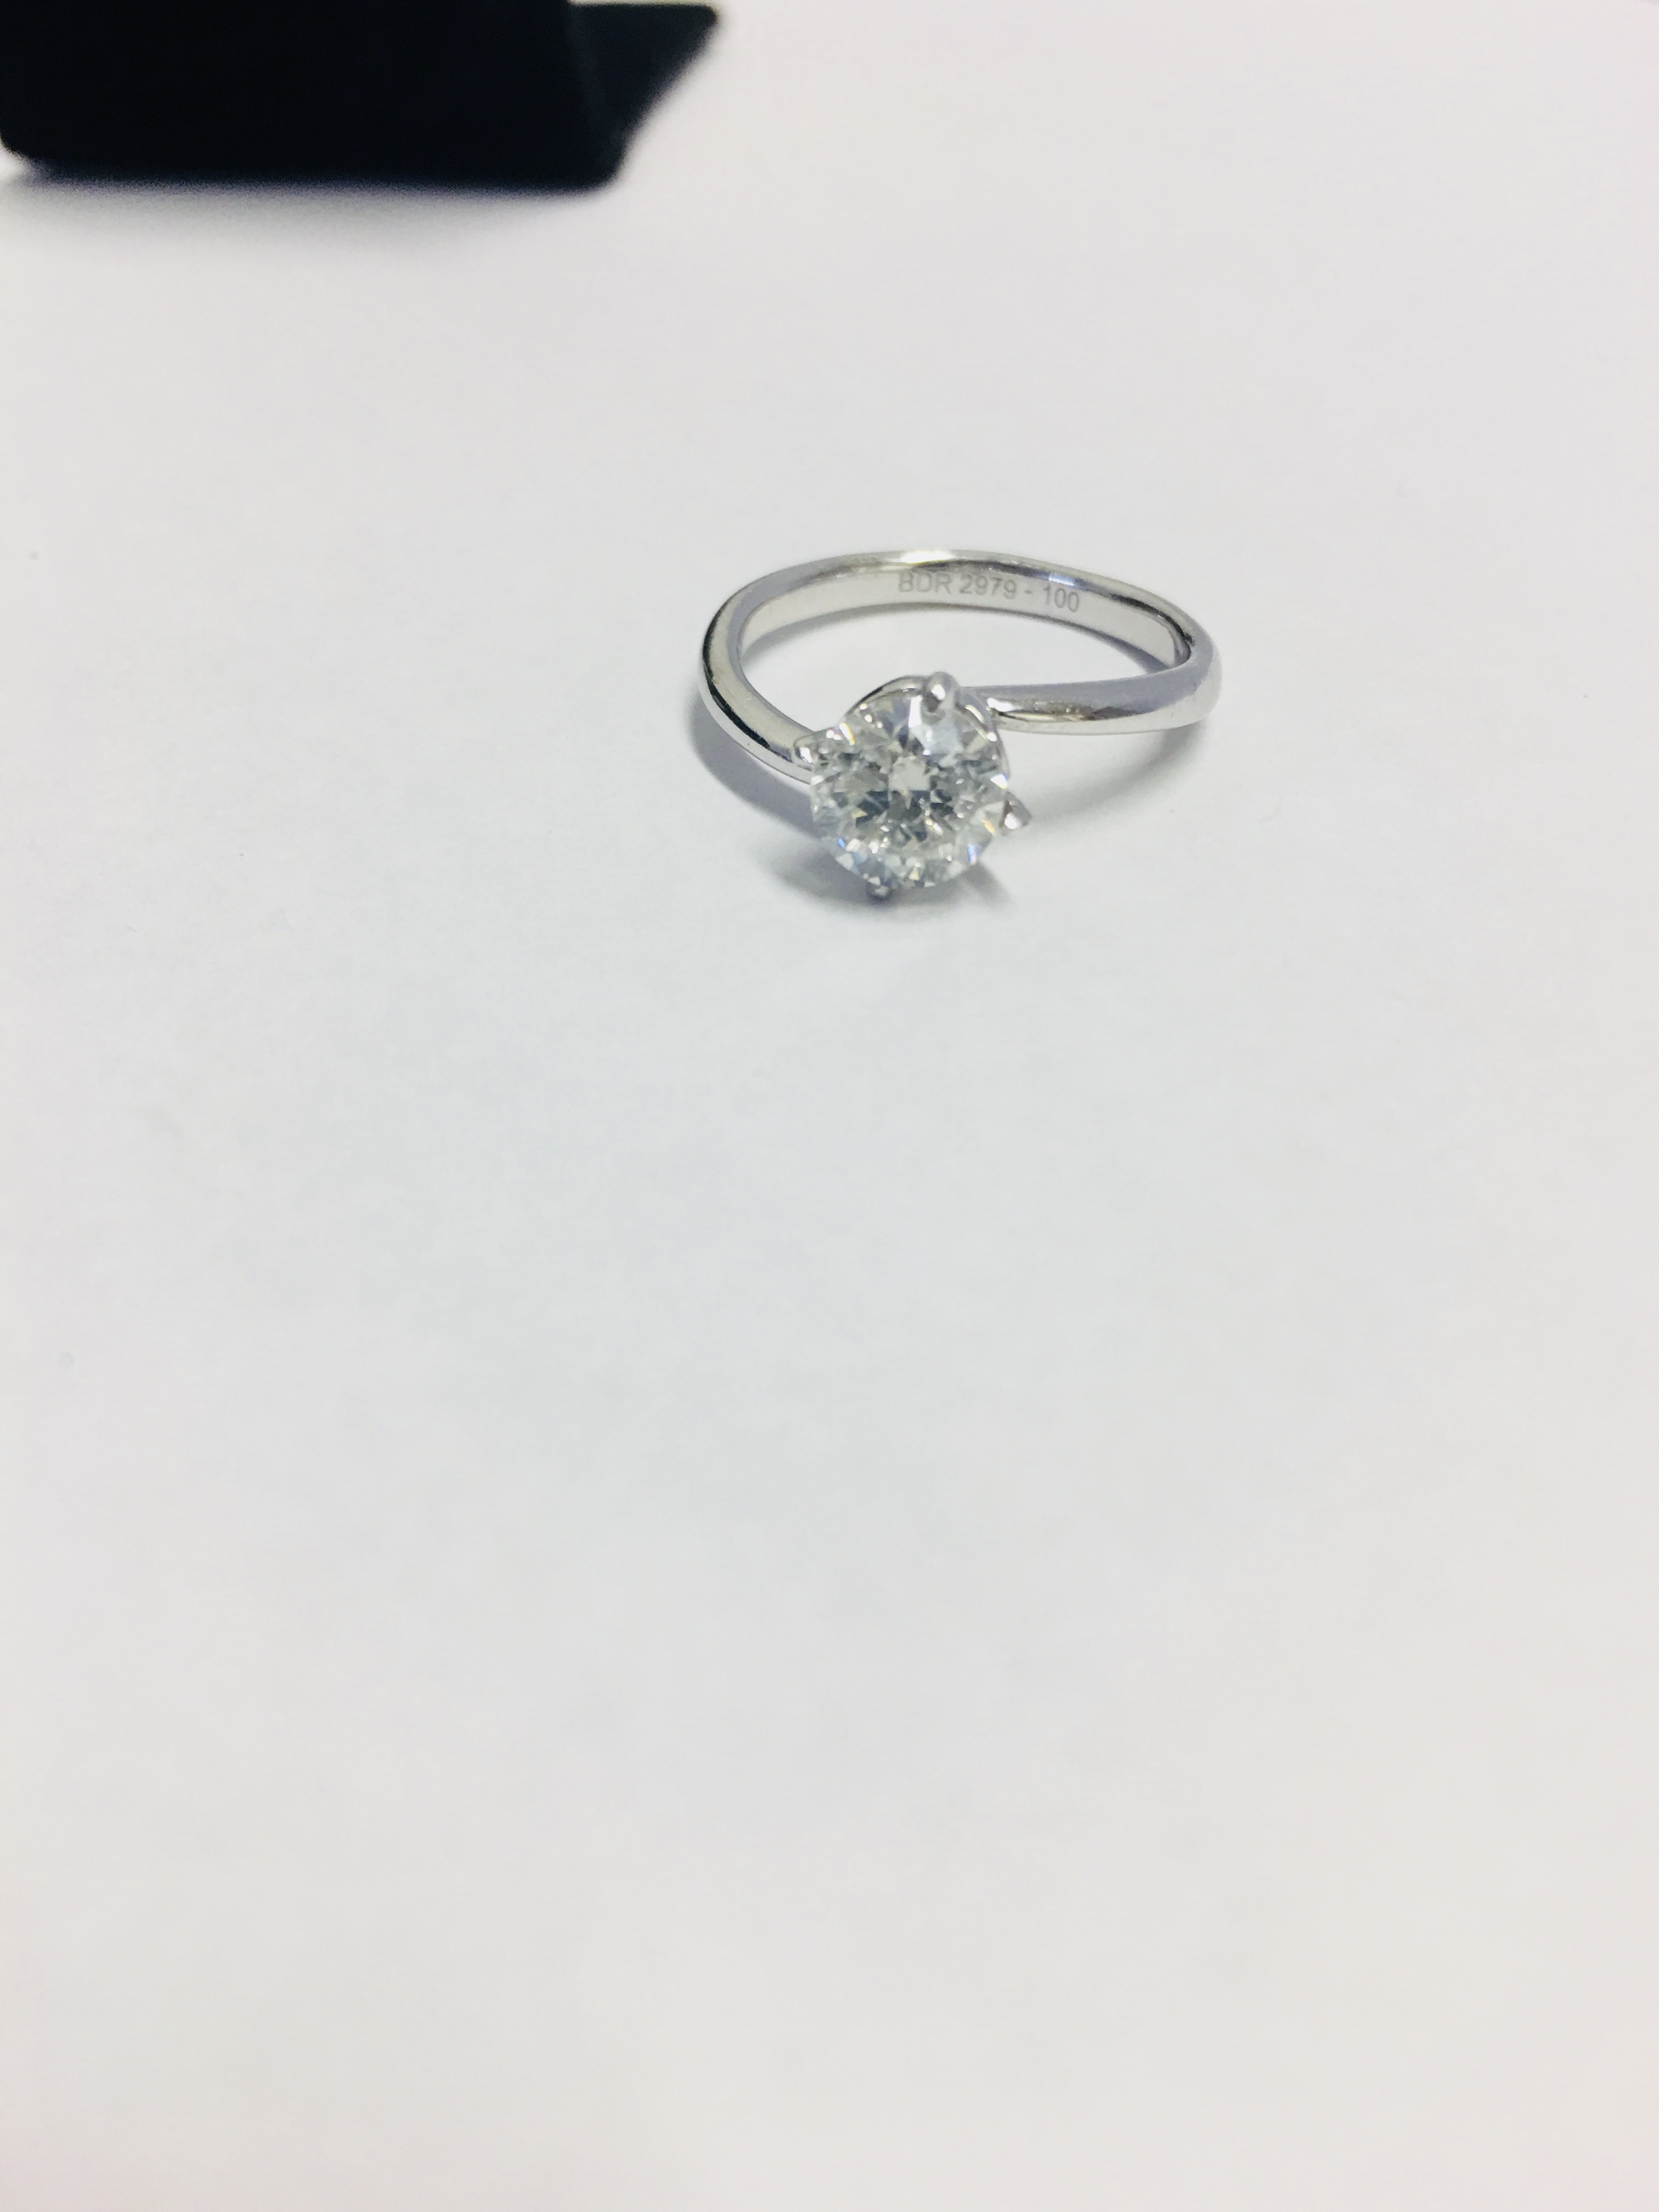 1Ct Brilliant Cut Diamond Solitaire Ring, - Image 6 of 6